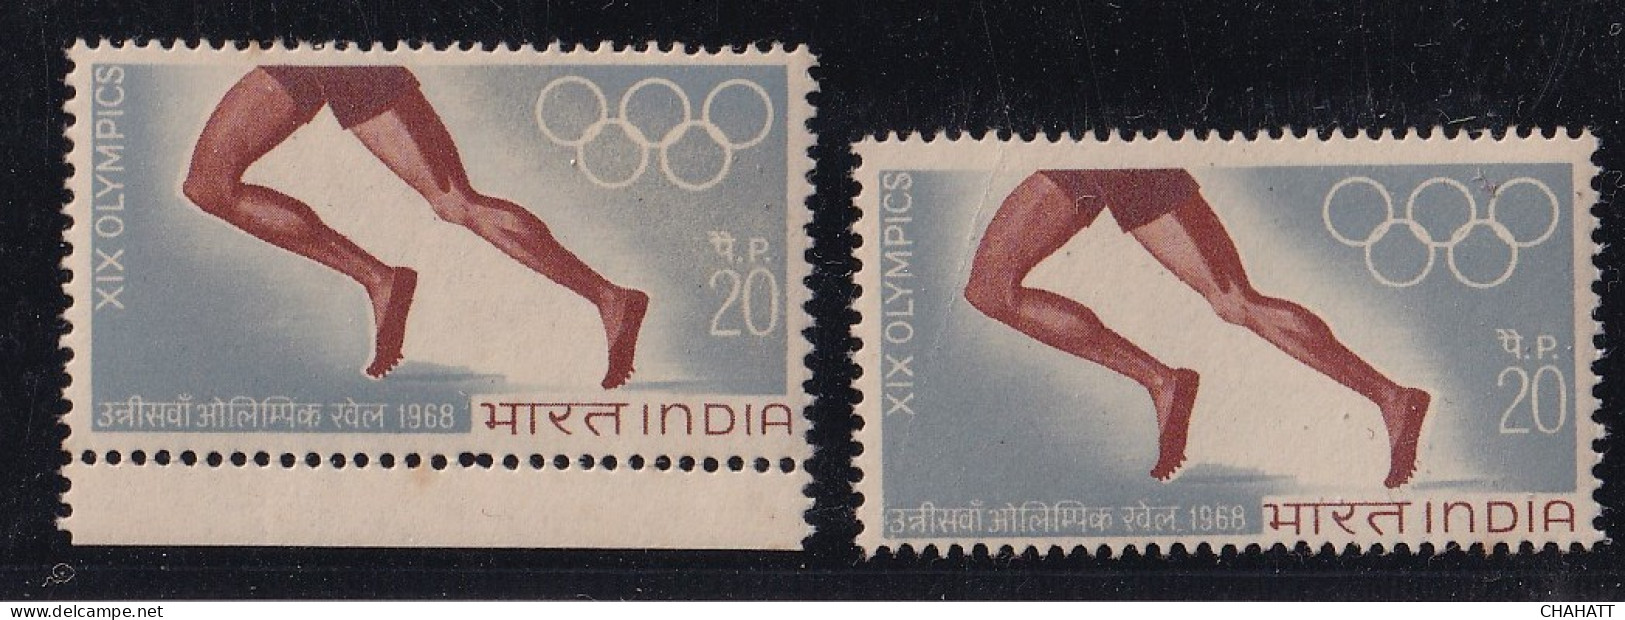 INDIA-19th OLYMPICS- 20p- ERROR-FRAME SHIFTING-MNH-IE-51 - Abarten Und Kuriositäten